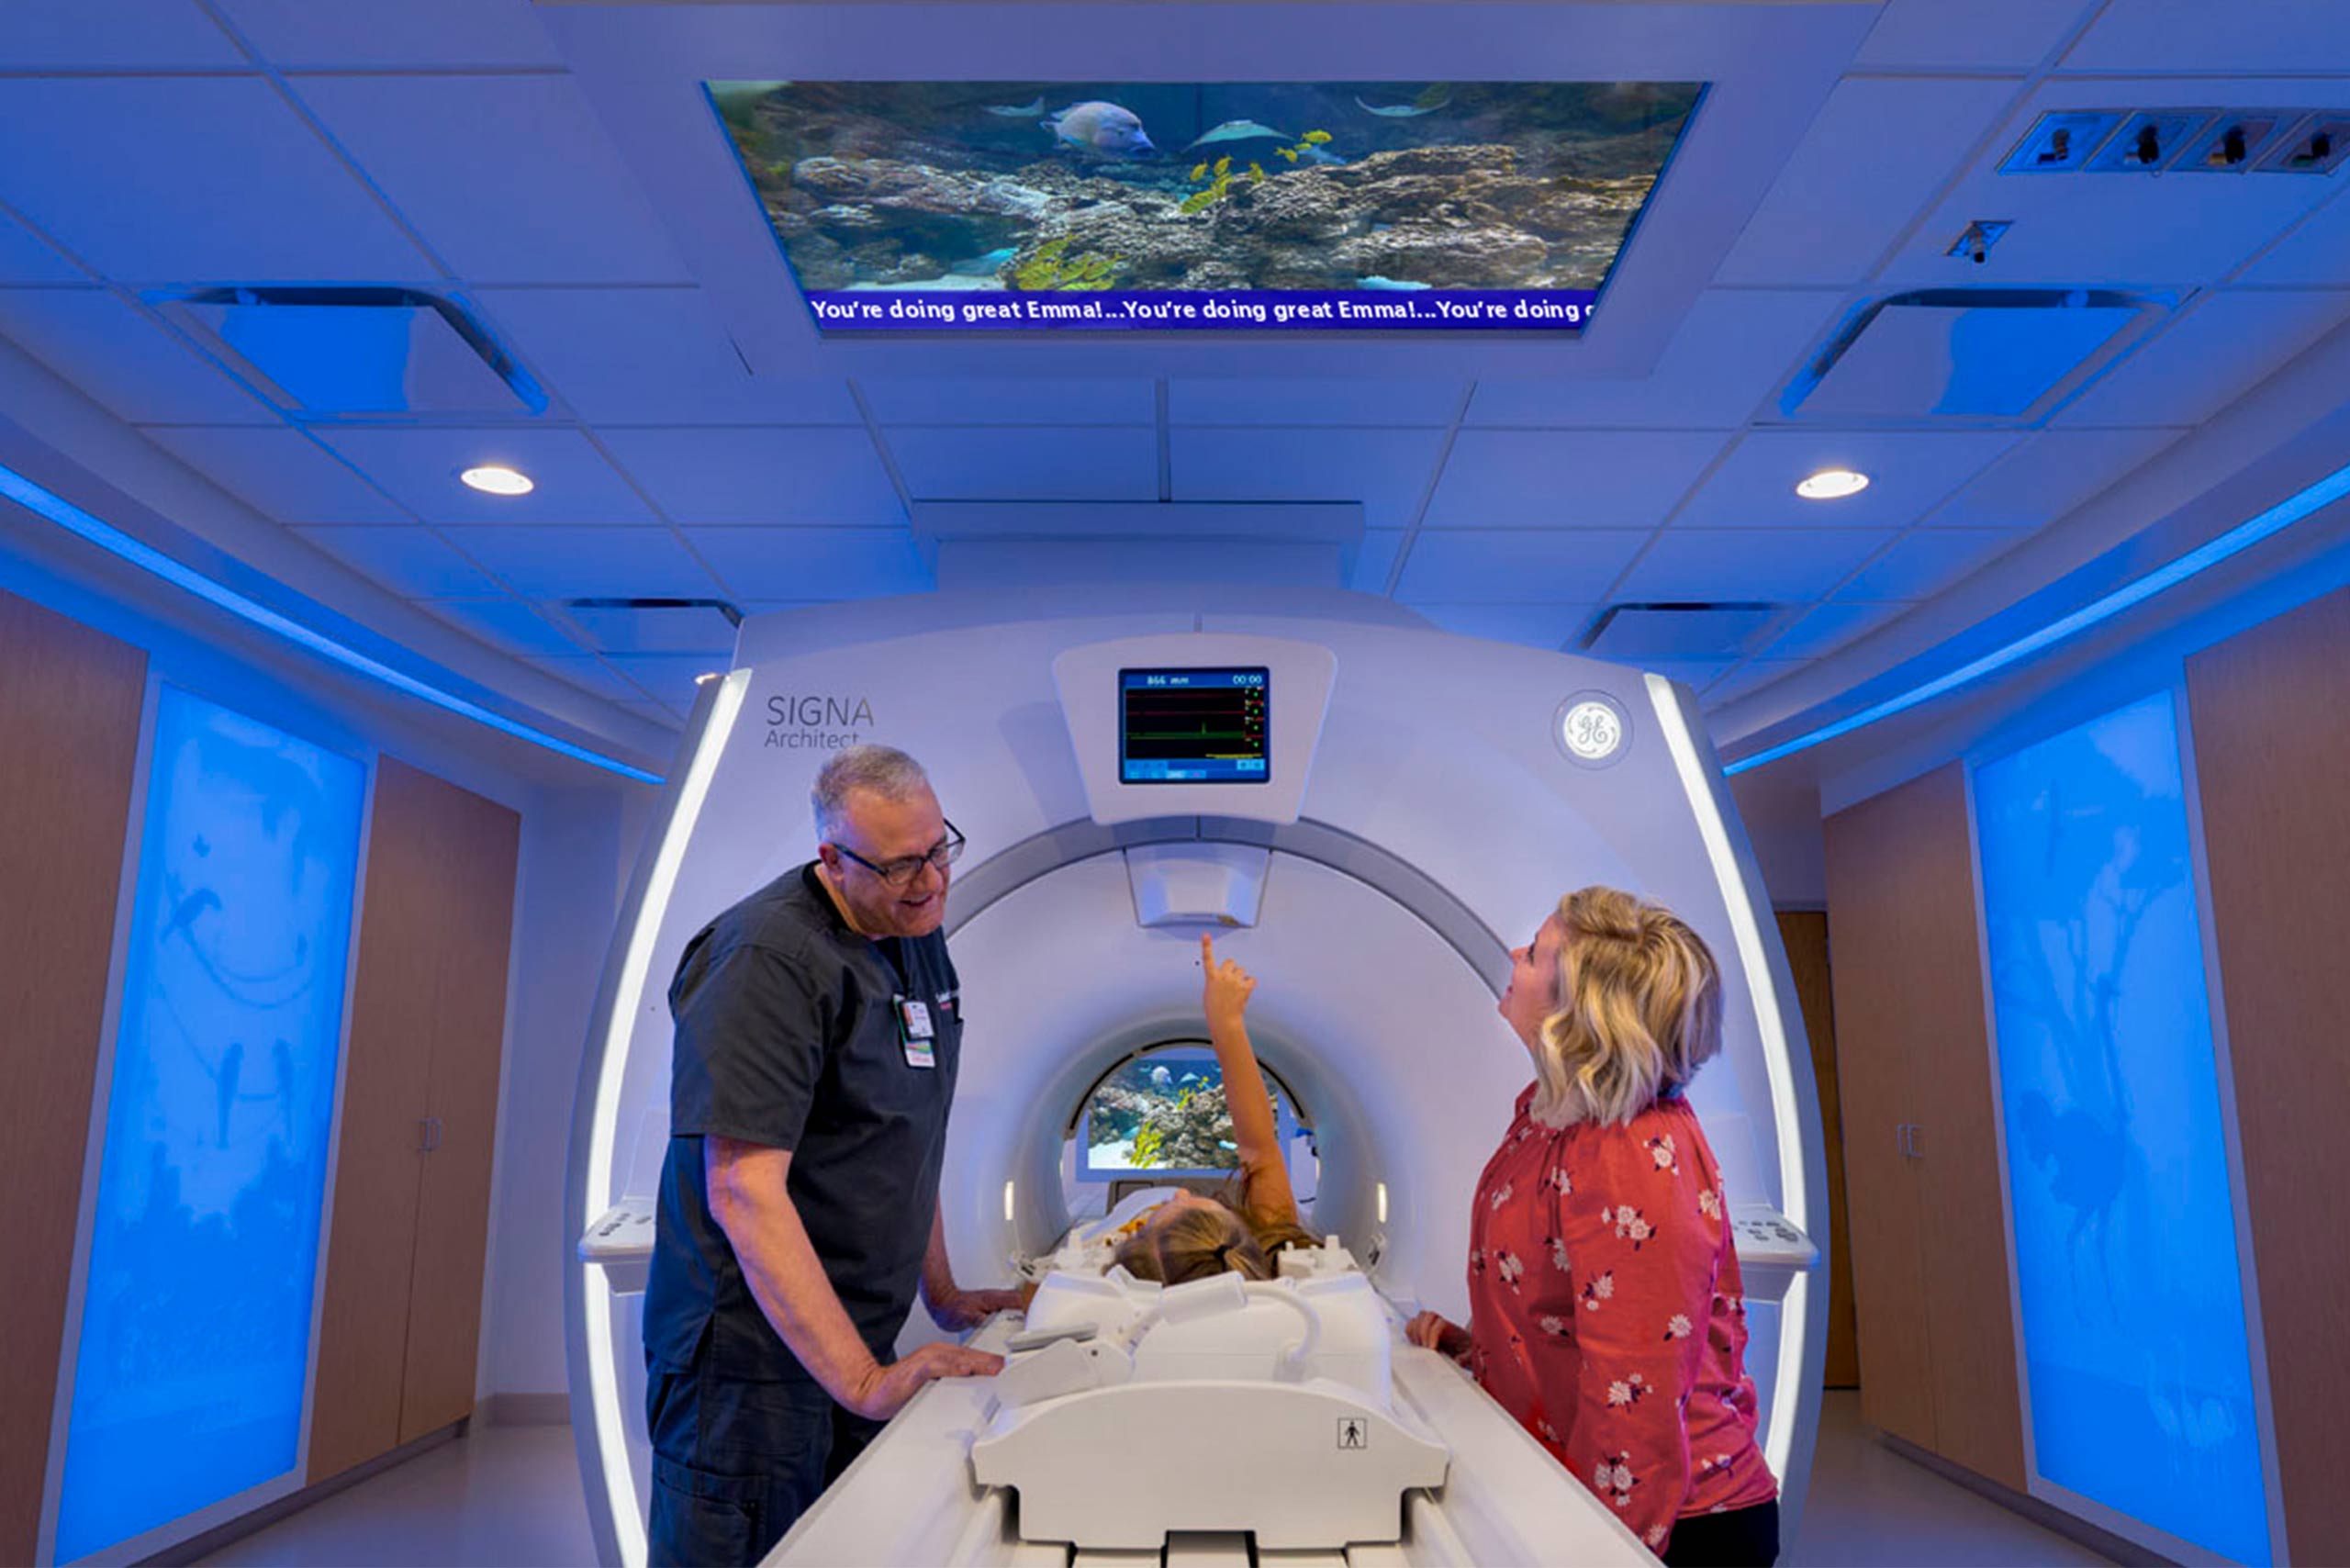 Saint Francis Children's pediatric Caring MR Suite® featuring 4K Ceiling Video Display, MRI in-bore viewing, RGB LED Lighting + custom Illuminate Wall Fixtures